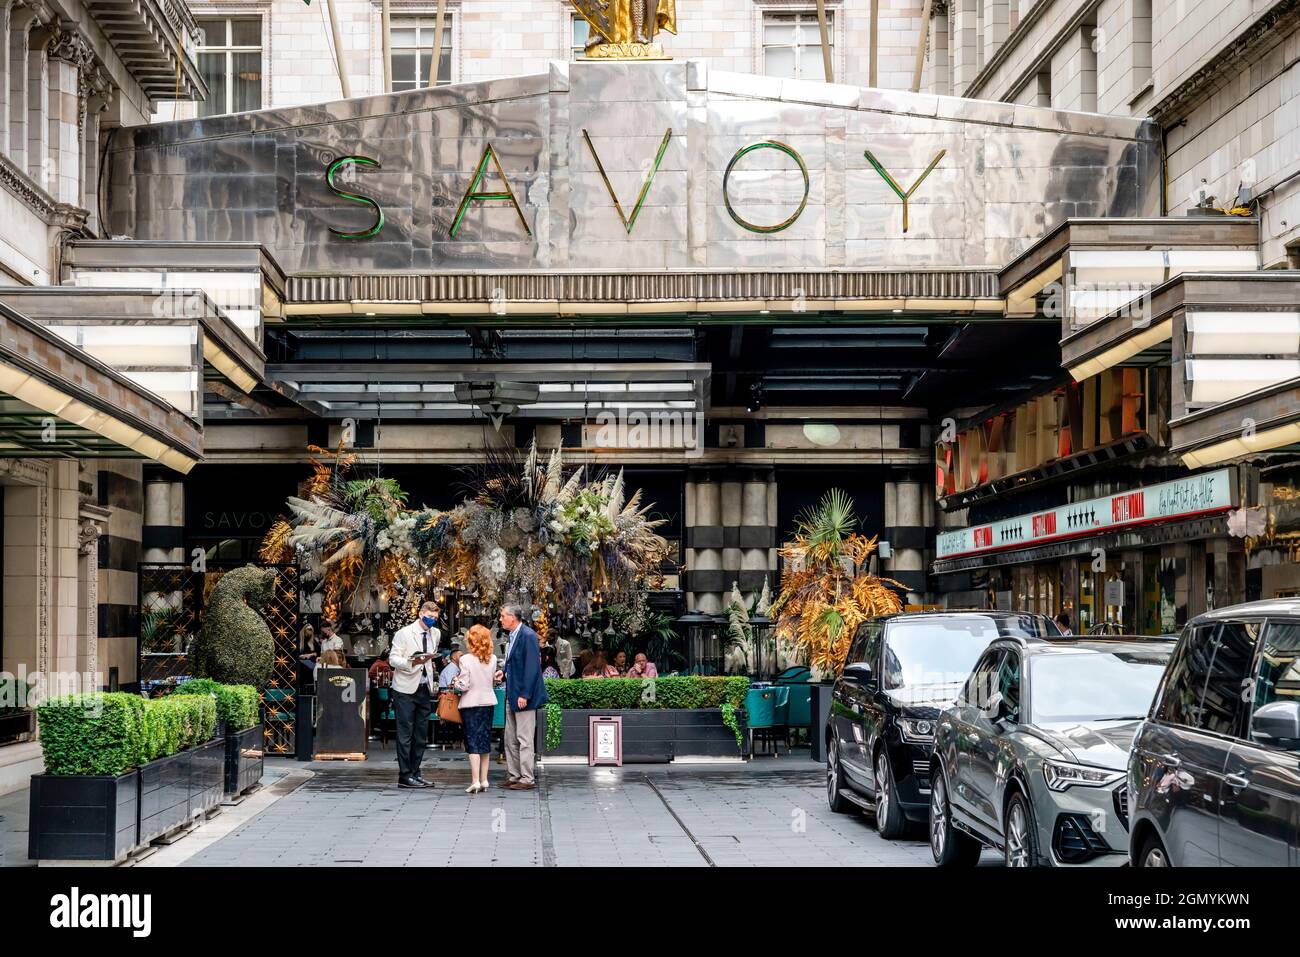 The Savoy Hotel Entrance, The Strand, London, UK. Stock Photo